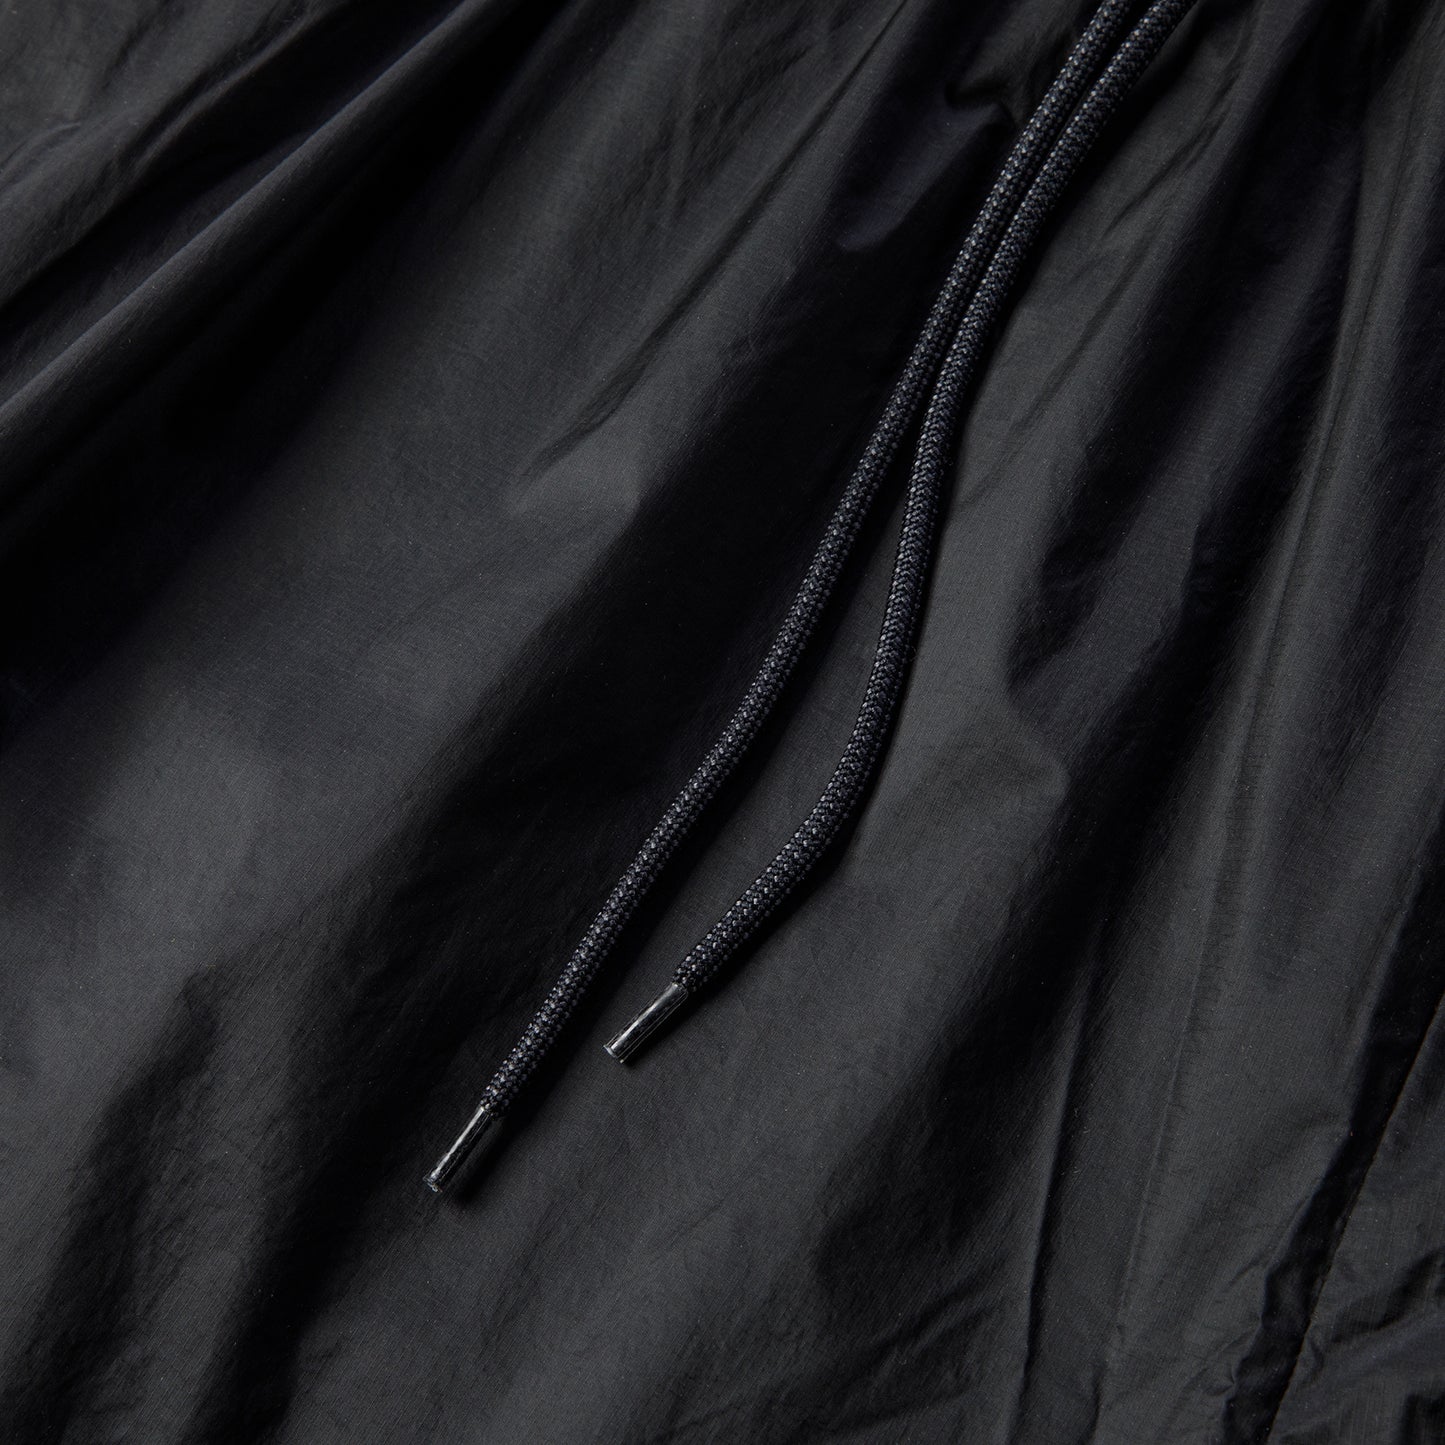 Nike ACG Cinder Windshell Pant (Black/Dark Smoke Grey/Summit White)